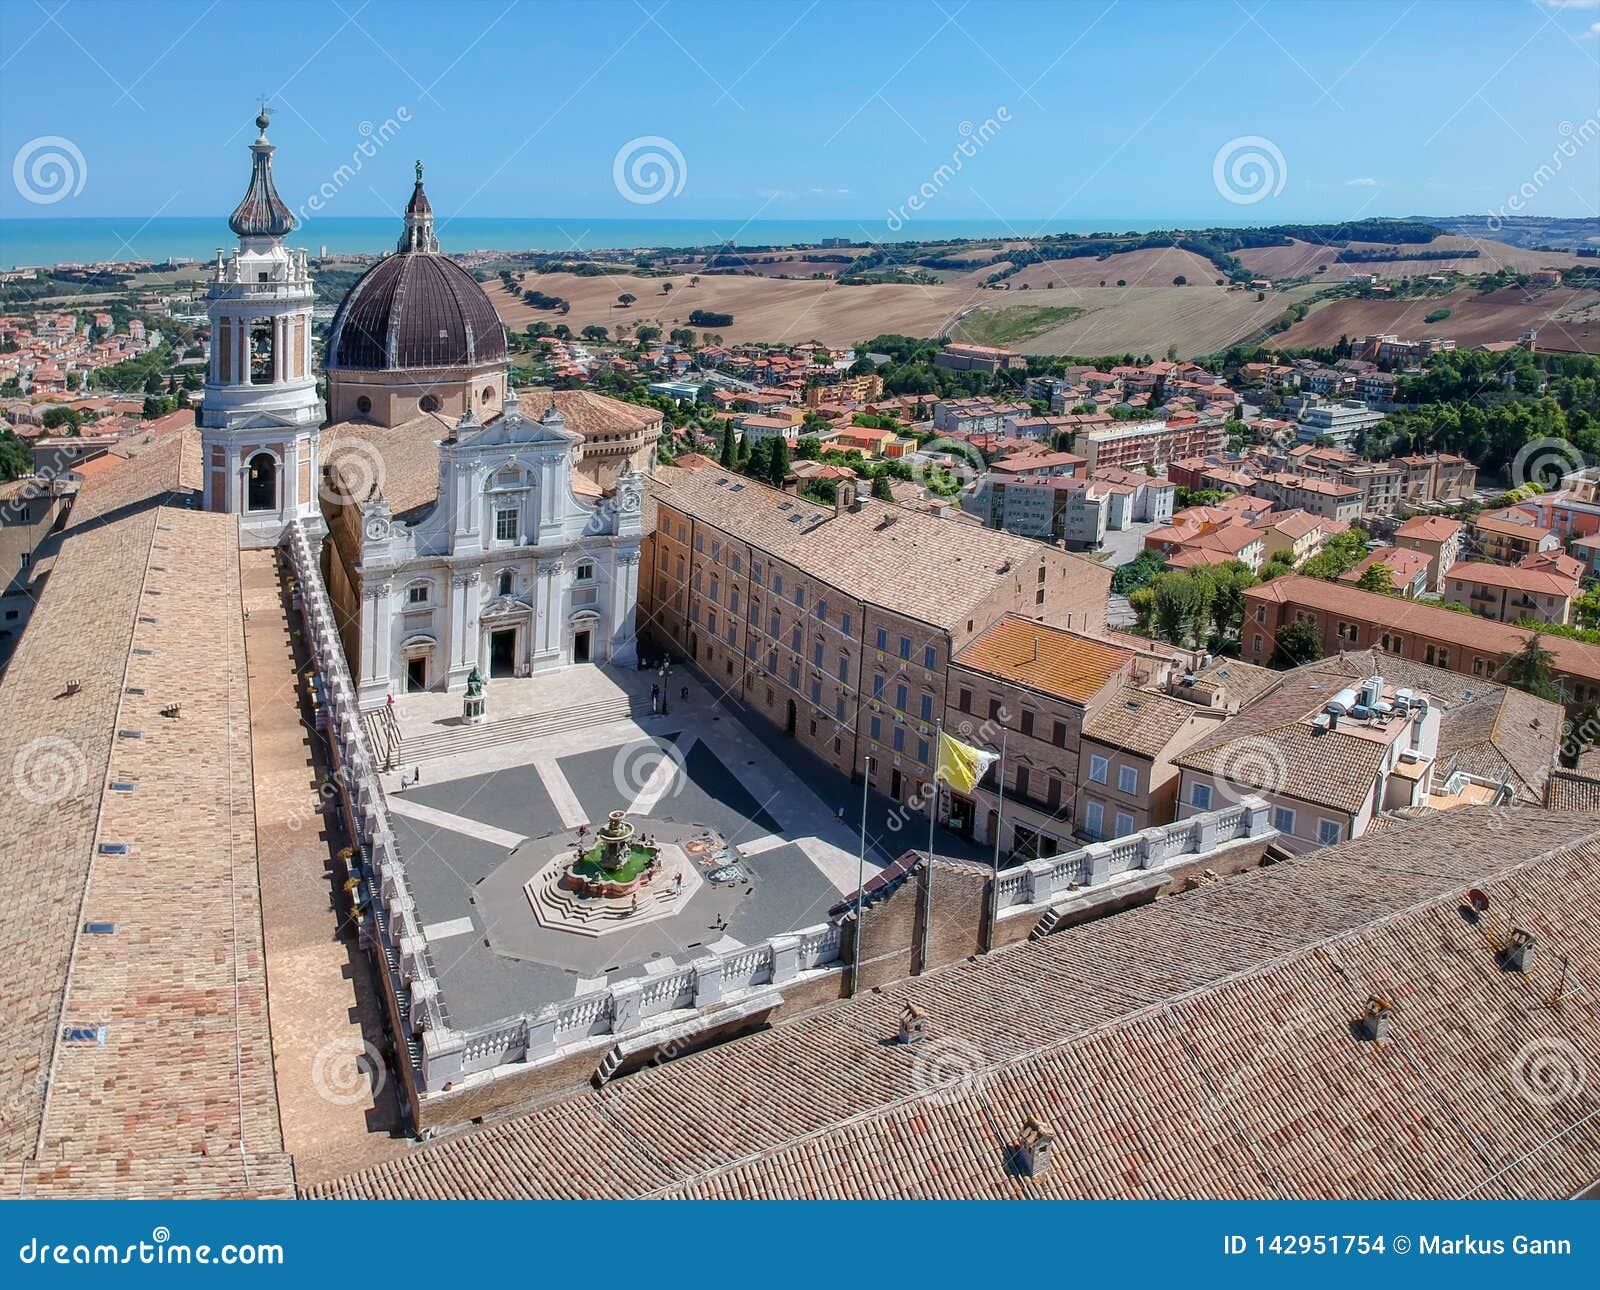 flight over basilica della santa casa loreto italy